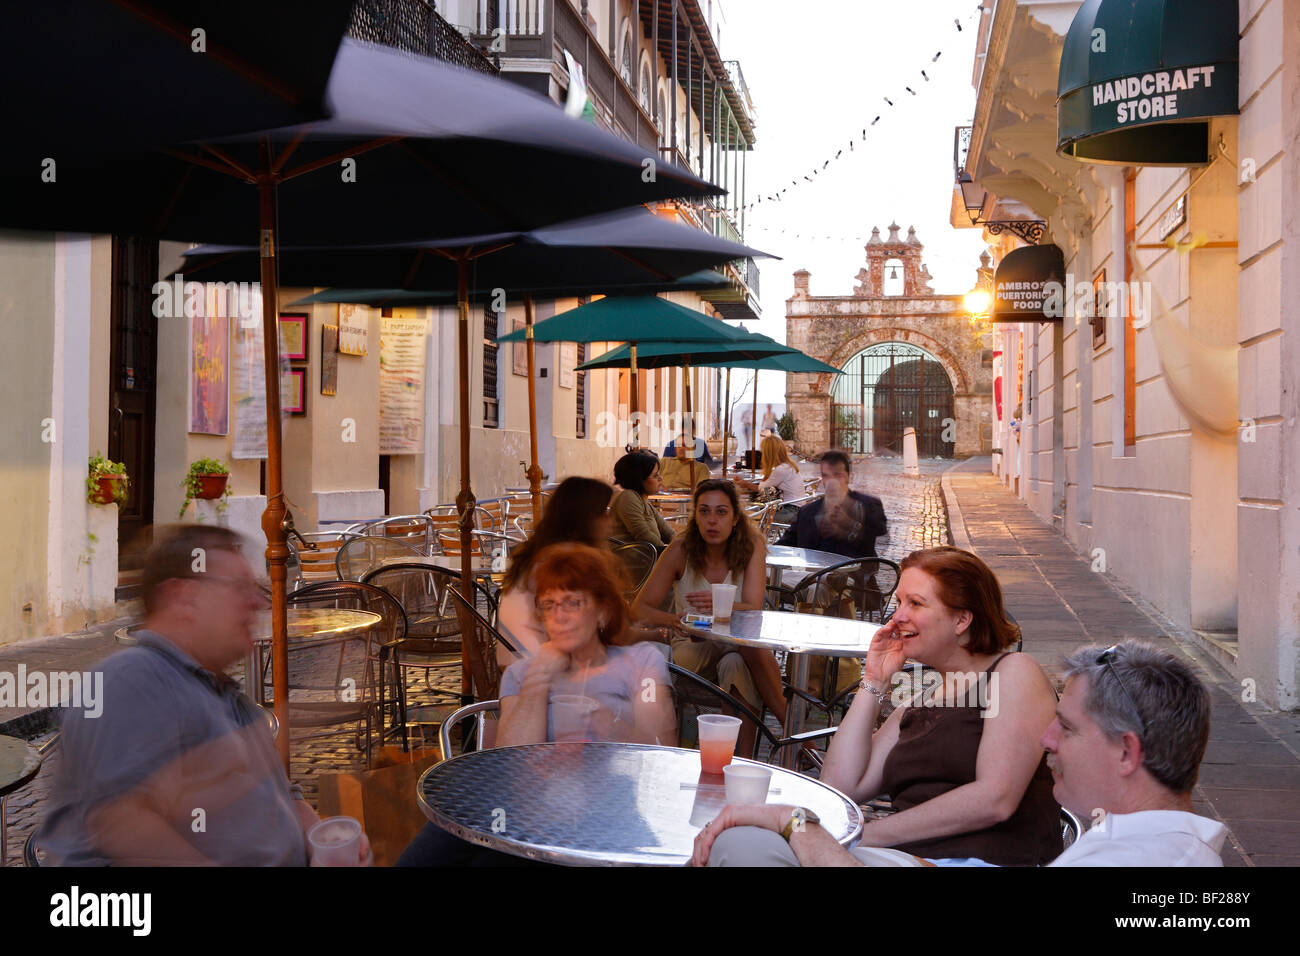 Cafe de puerto rico fotografías e imágenes de alta resolución - Alamy